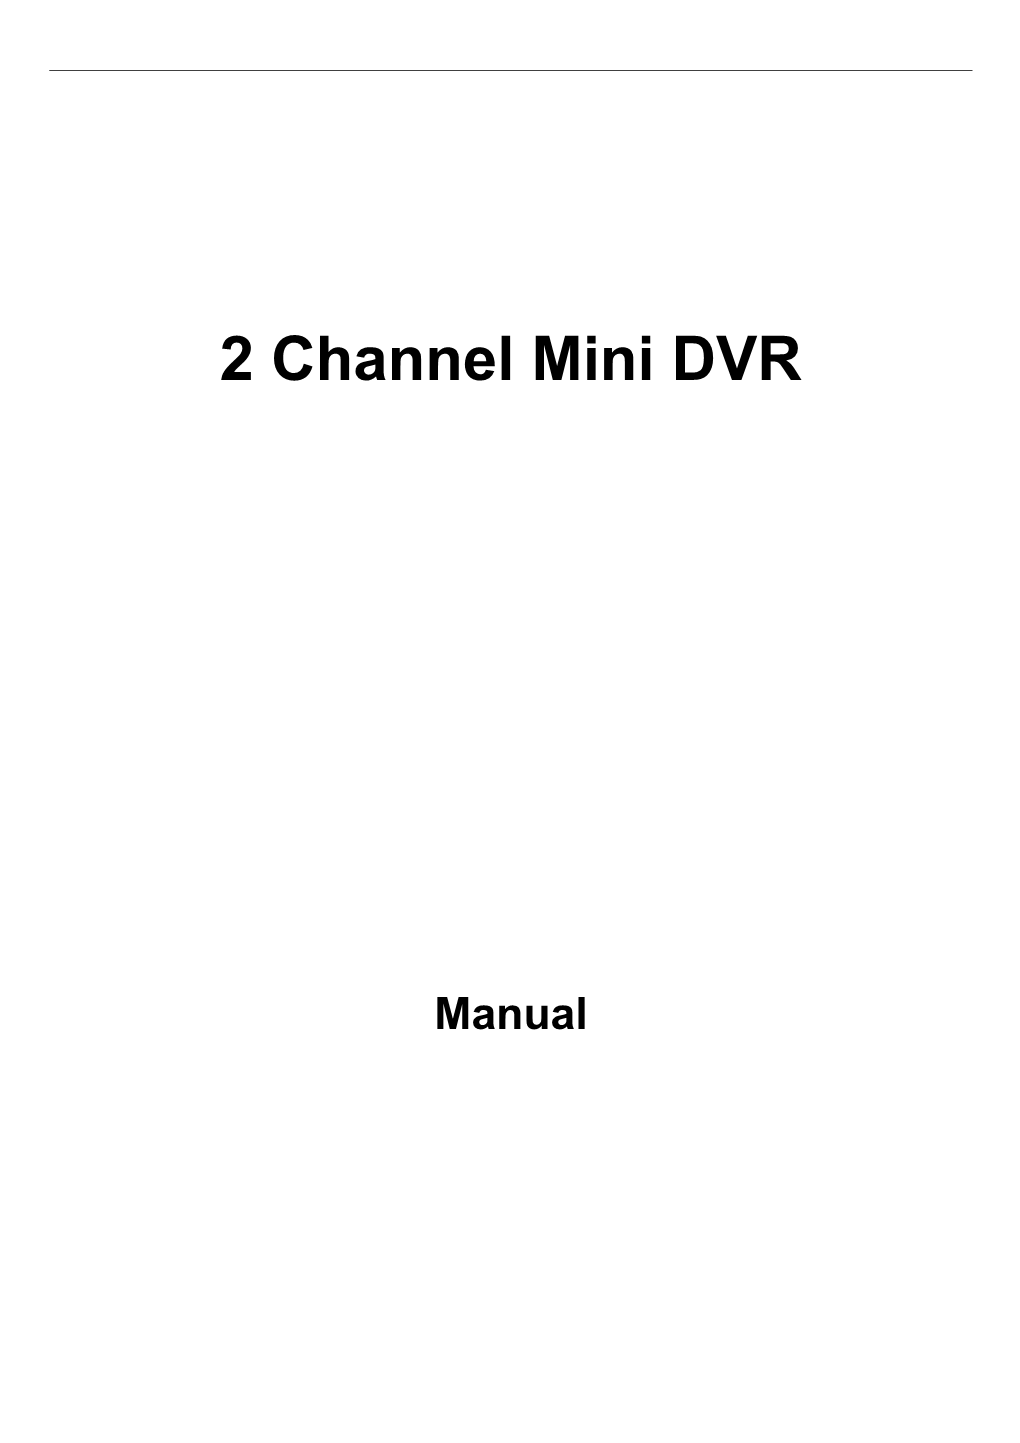 2 Channel Mini DVR Manual